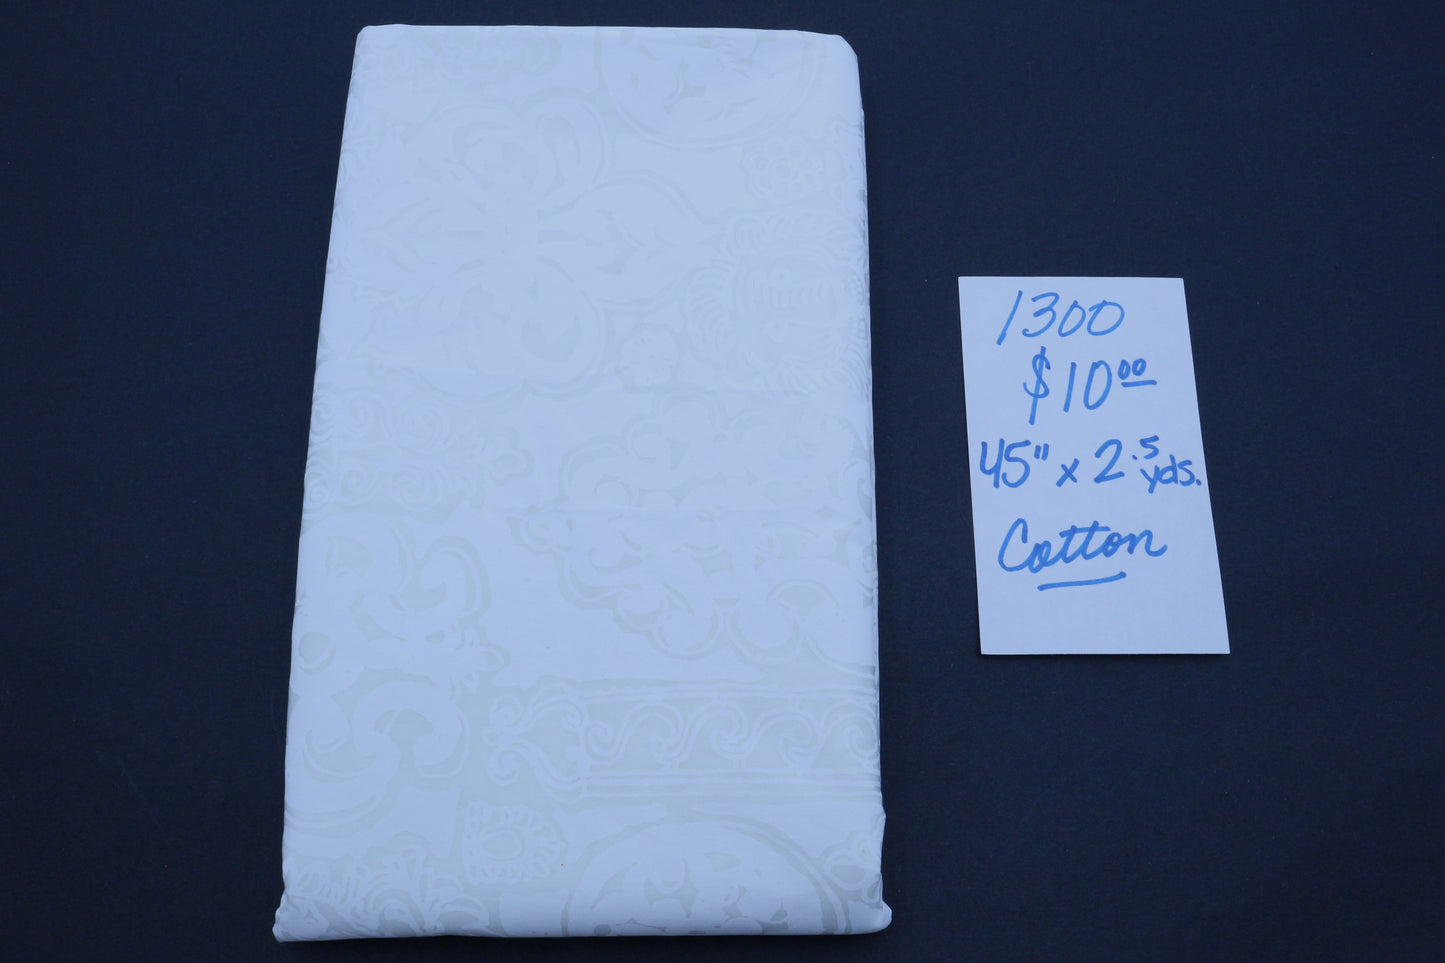 Key West Theme White Cotton Fabric 45" x 2.5 yds